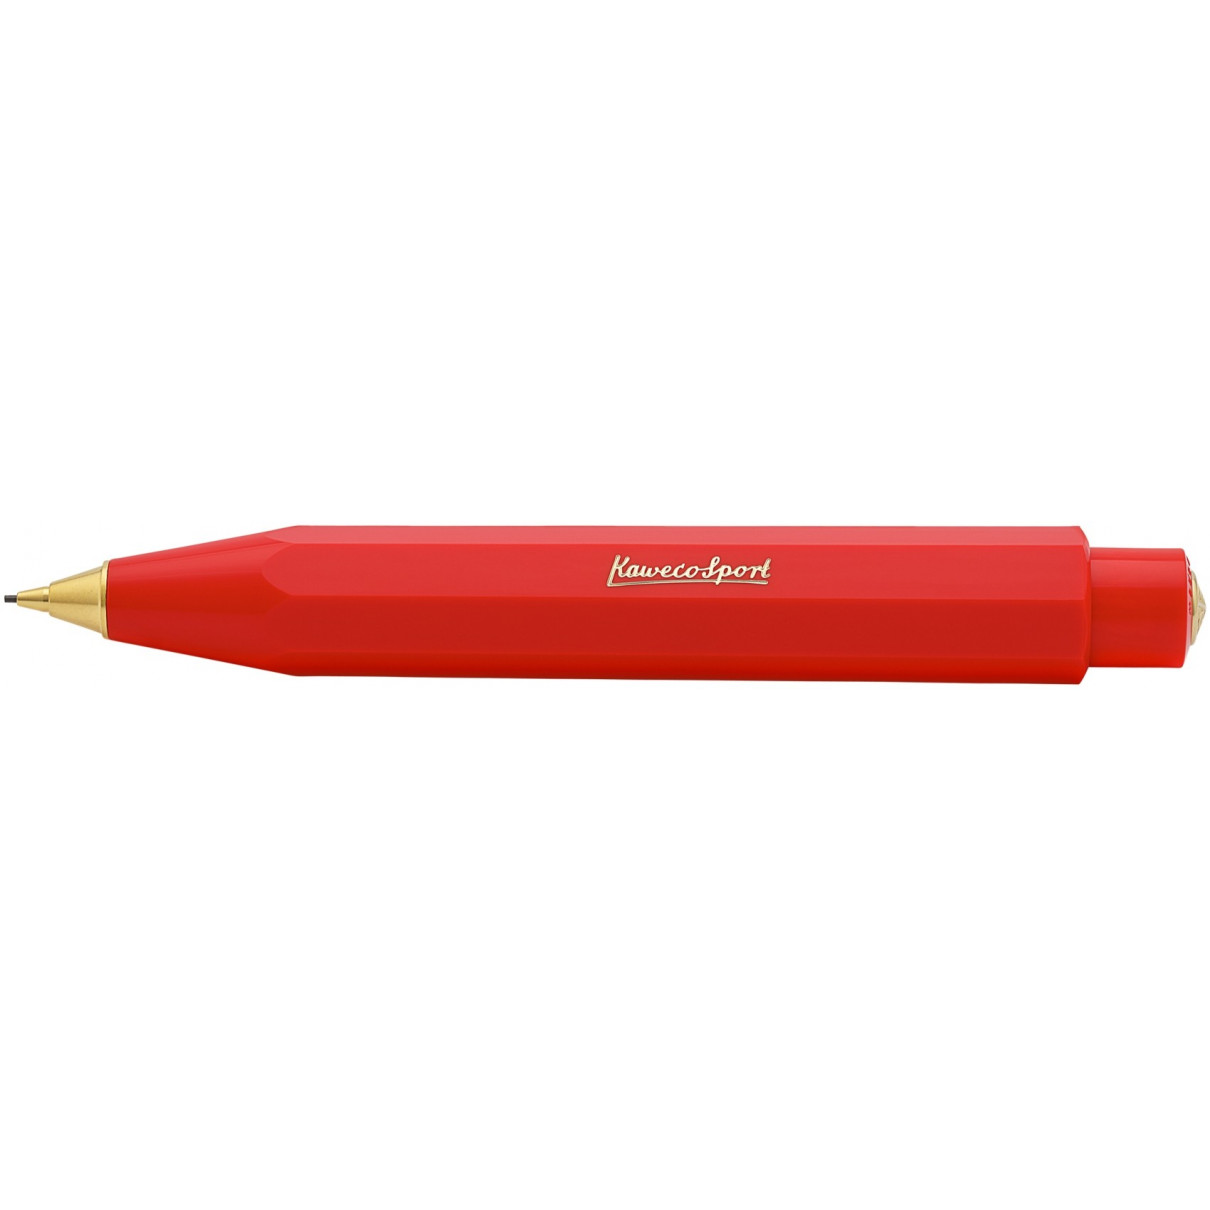 Kaweco Classic Sport Pencil - Red